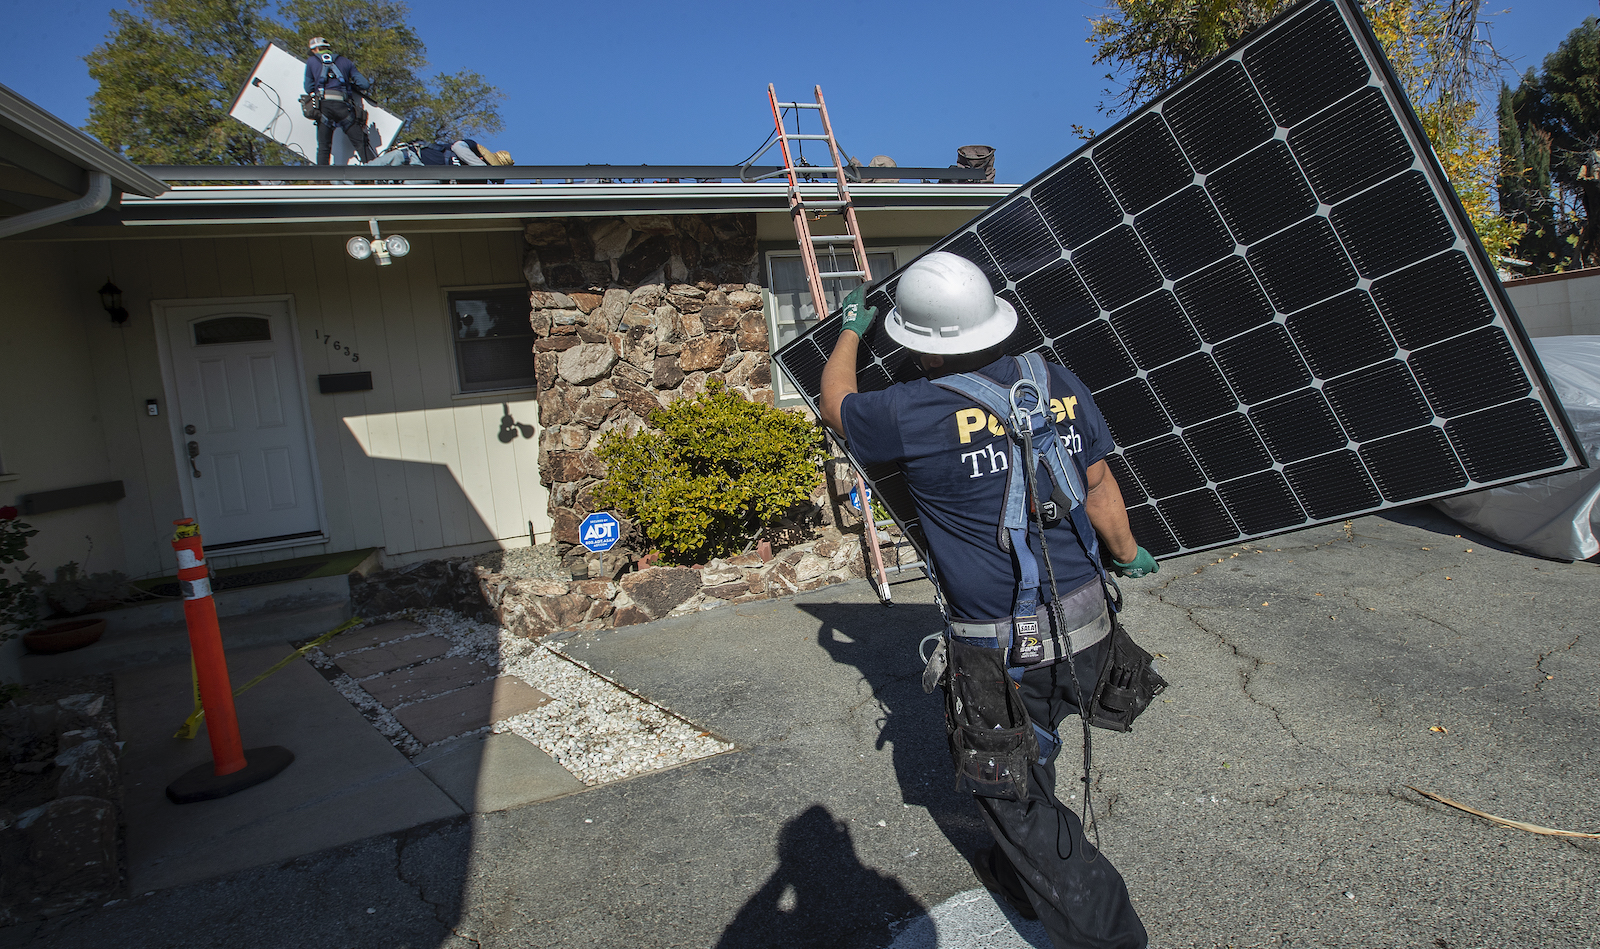 solar panel installer carries a solar panel toward a house